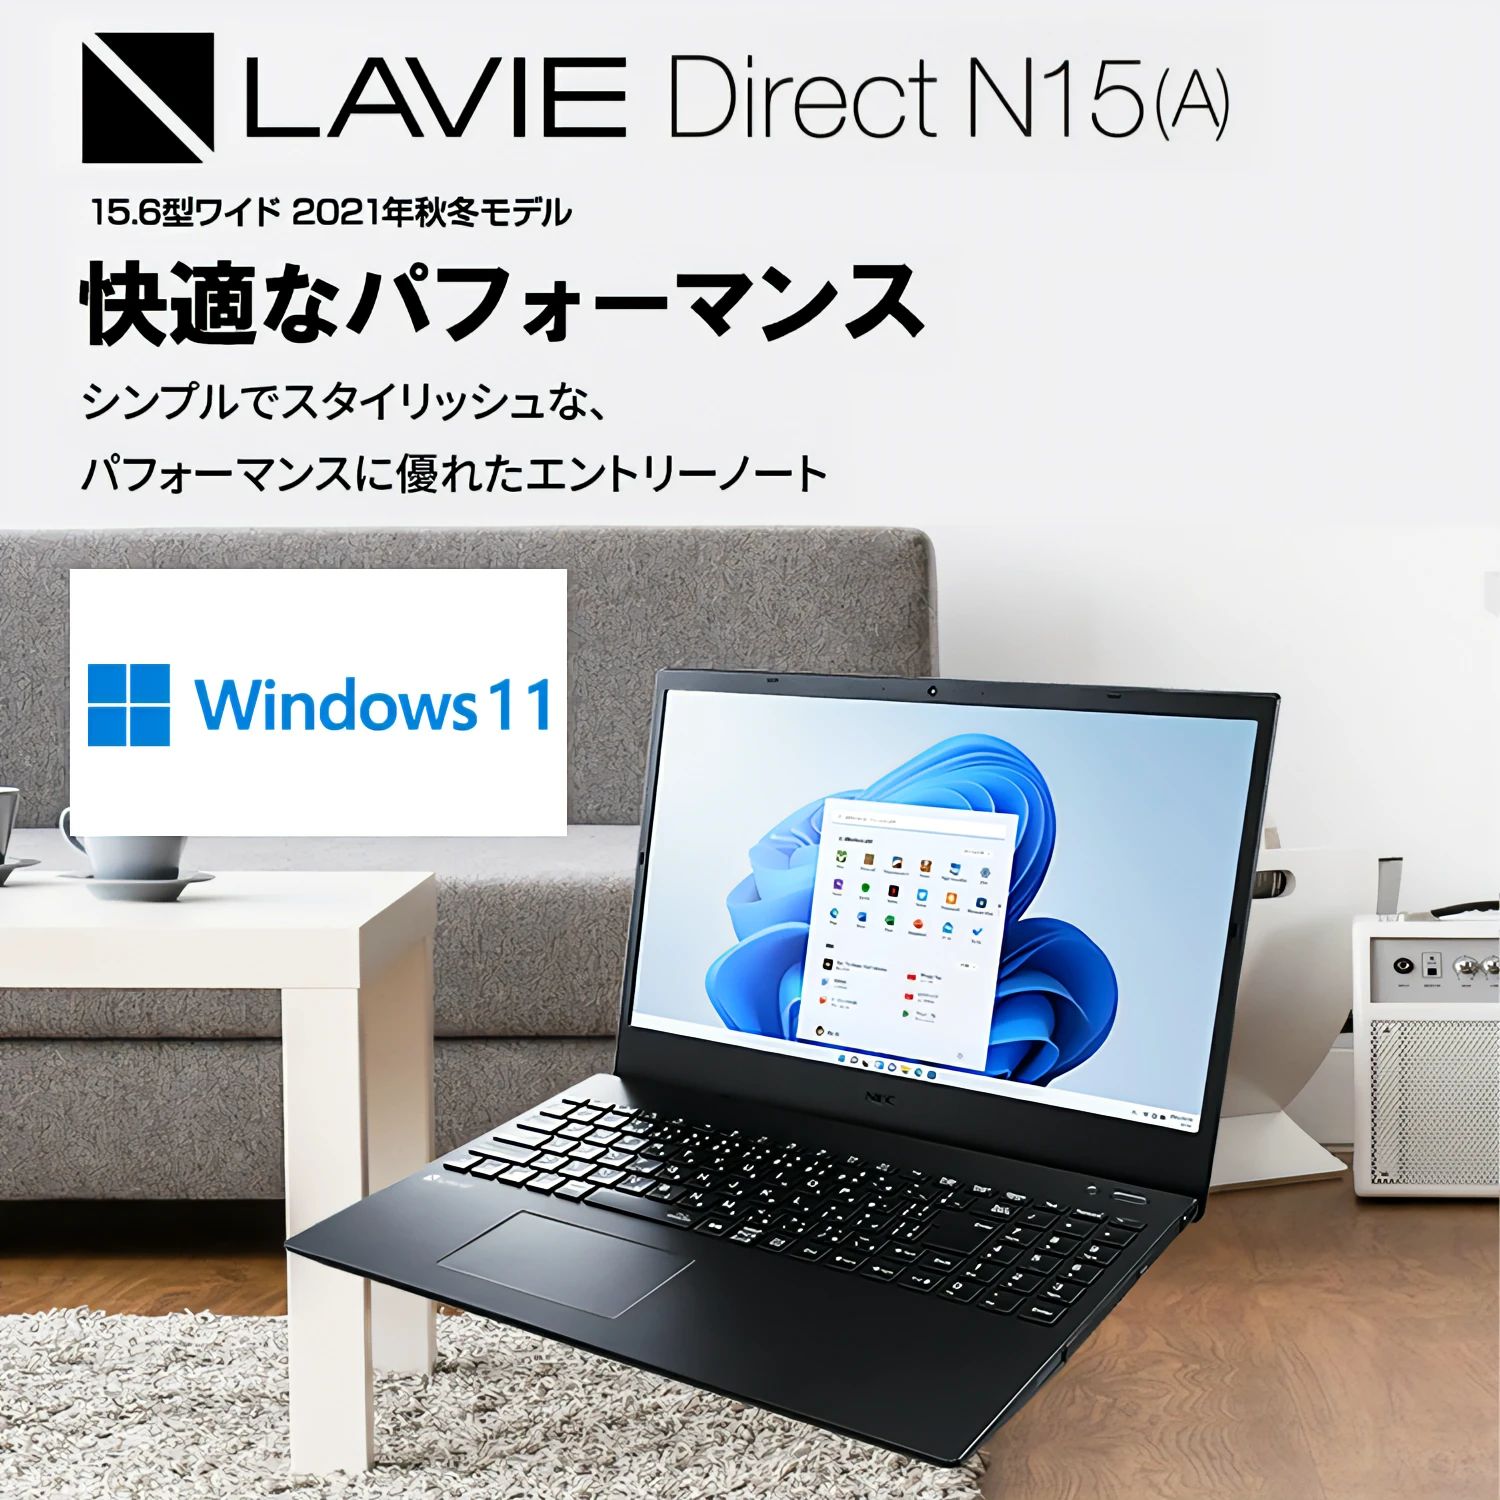  NEC LAVIE Direct N15(R) [15.6インチ] スタンド 大型冷却ファン搭載 ノートパソコン ノートPC スタンド 折り畳み式 4段階調整 と 反射防止 液晶保護フィルム セット メール便送料無料